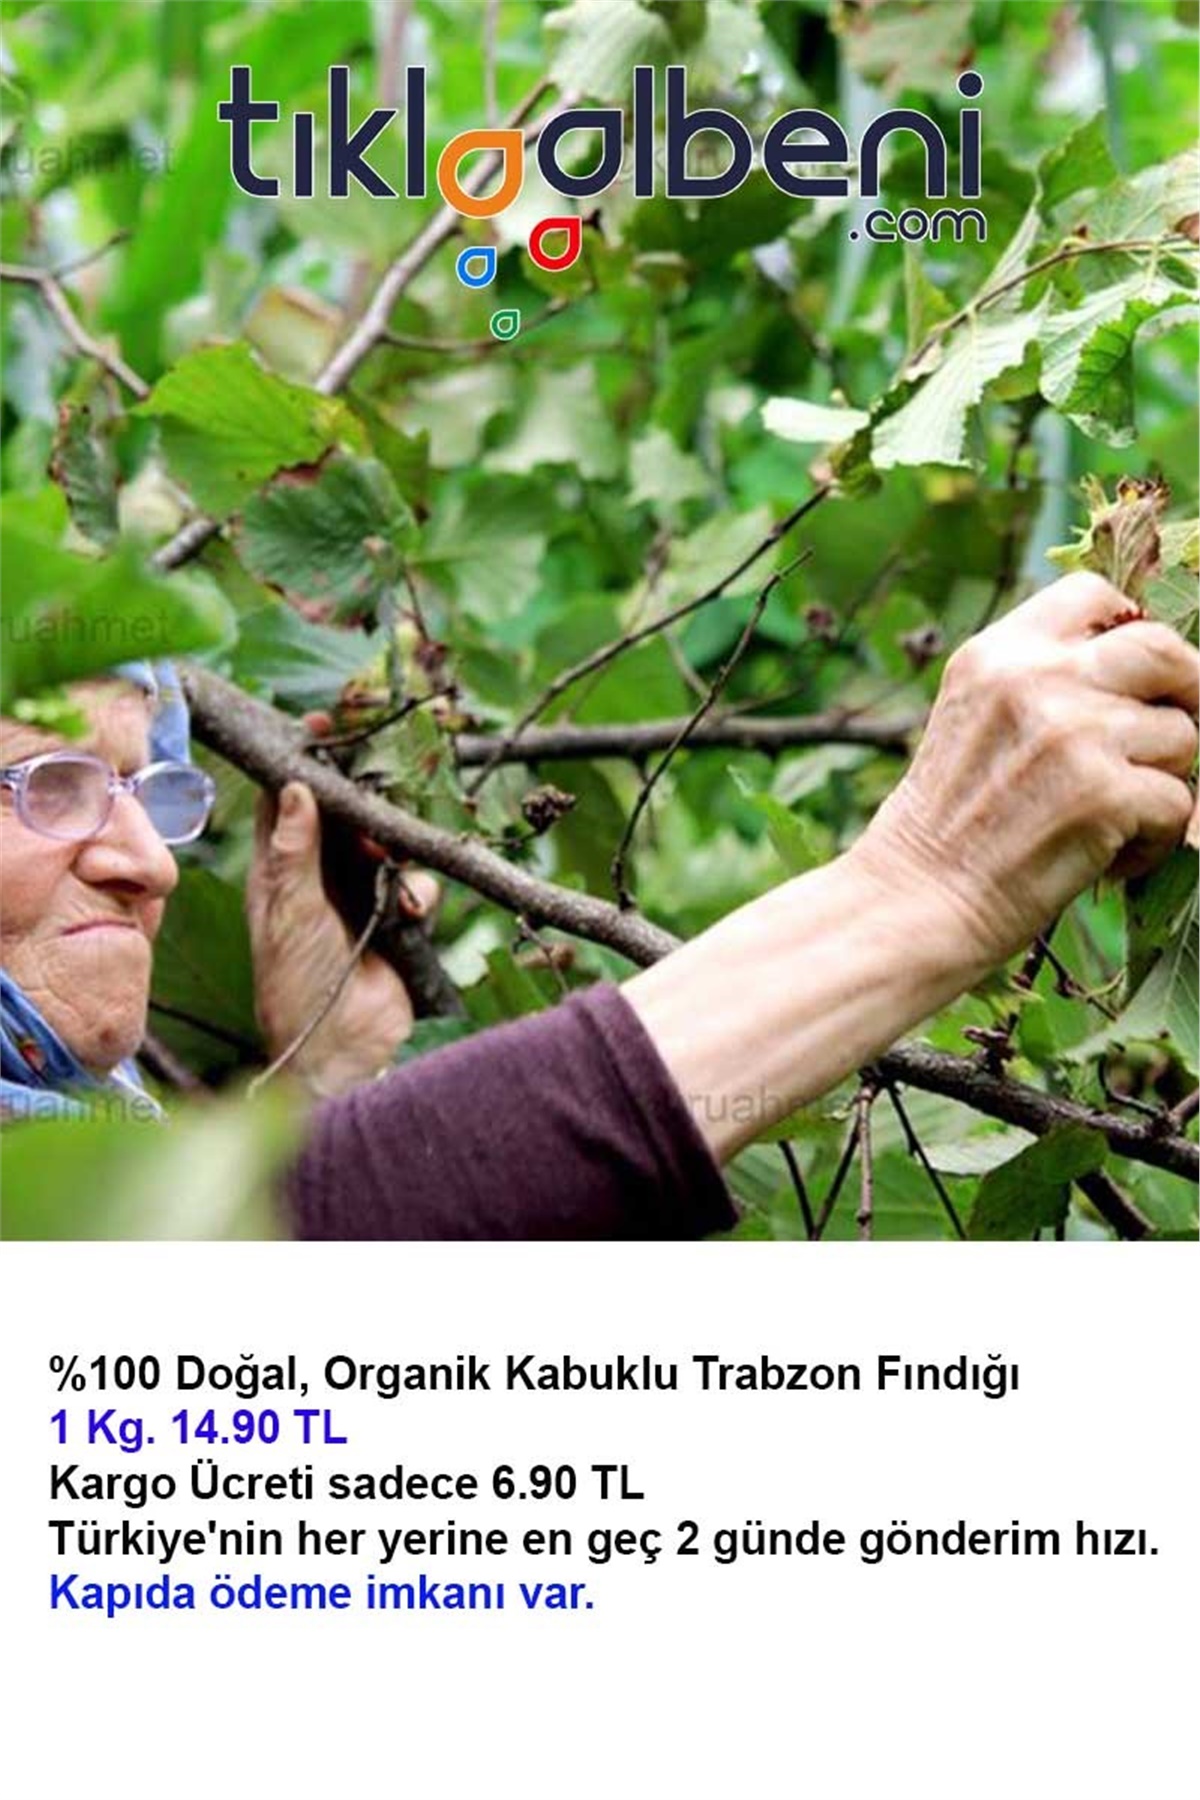 Organik Trabzon Fındığı, Kabuklu Fındık 1 Kg 14.90 TL